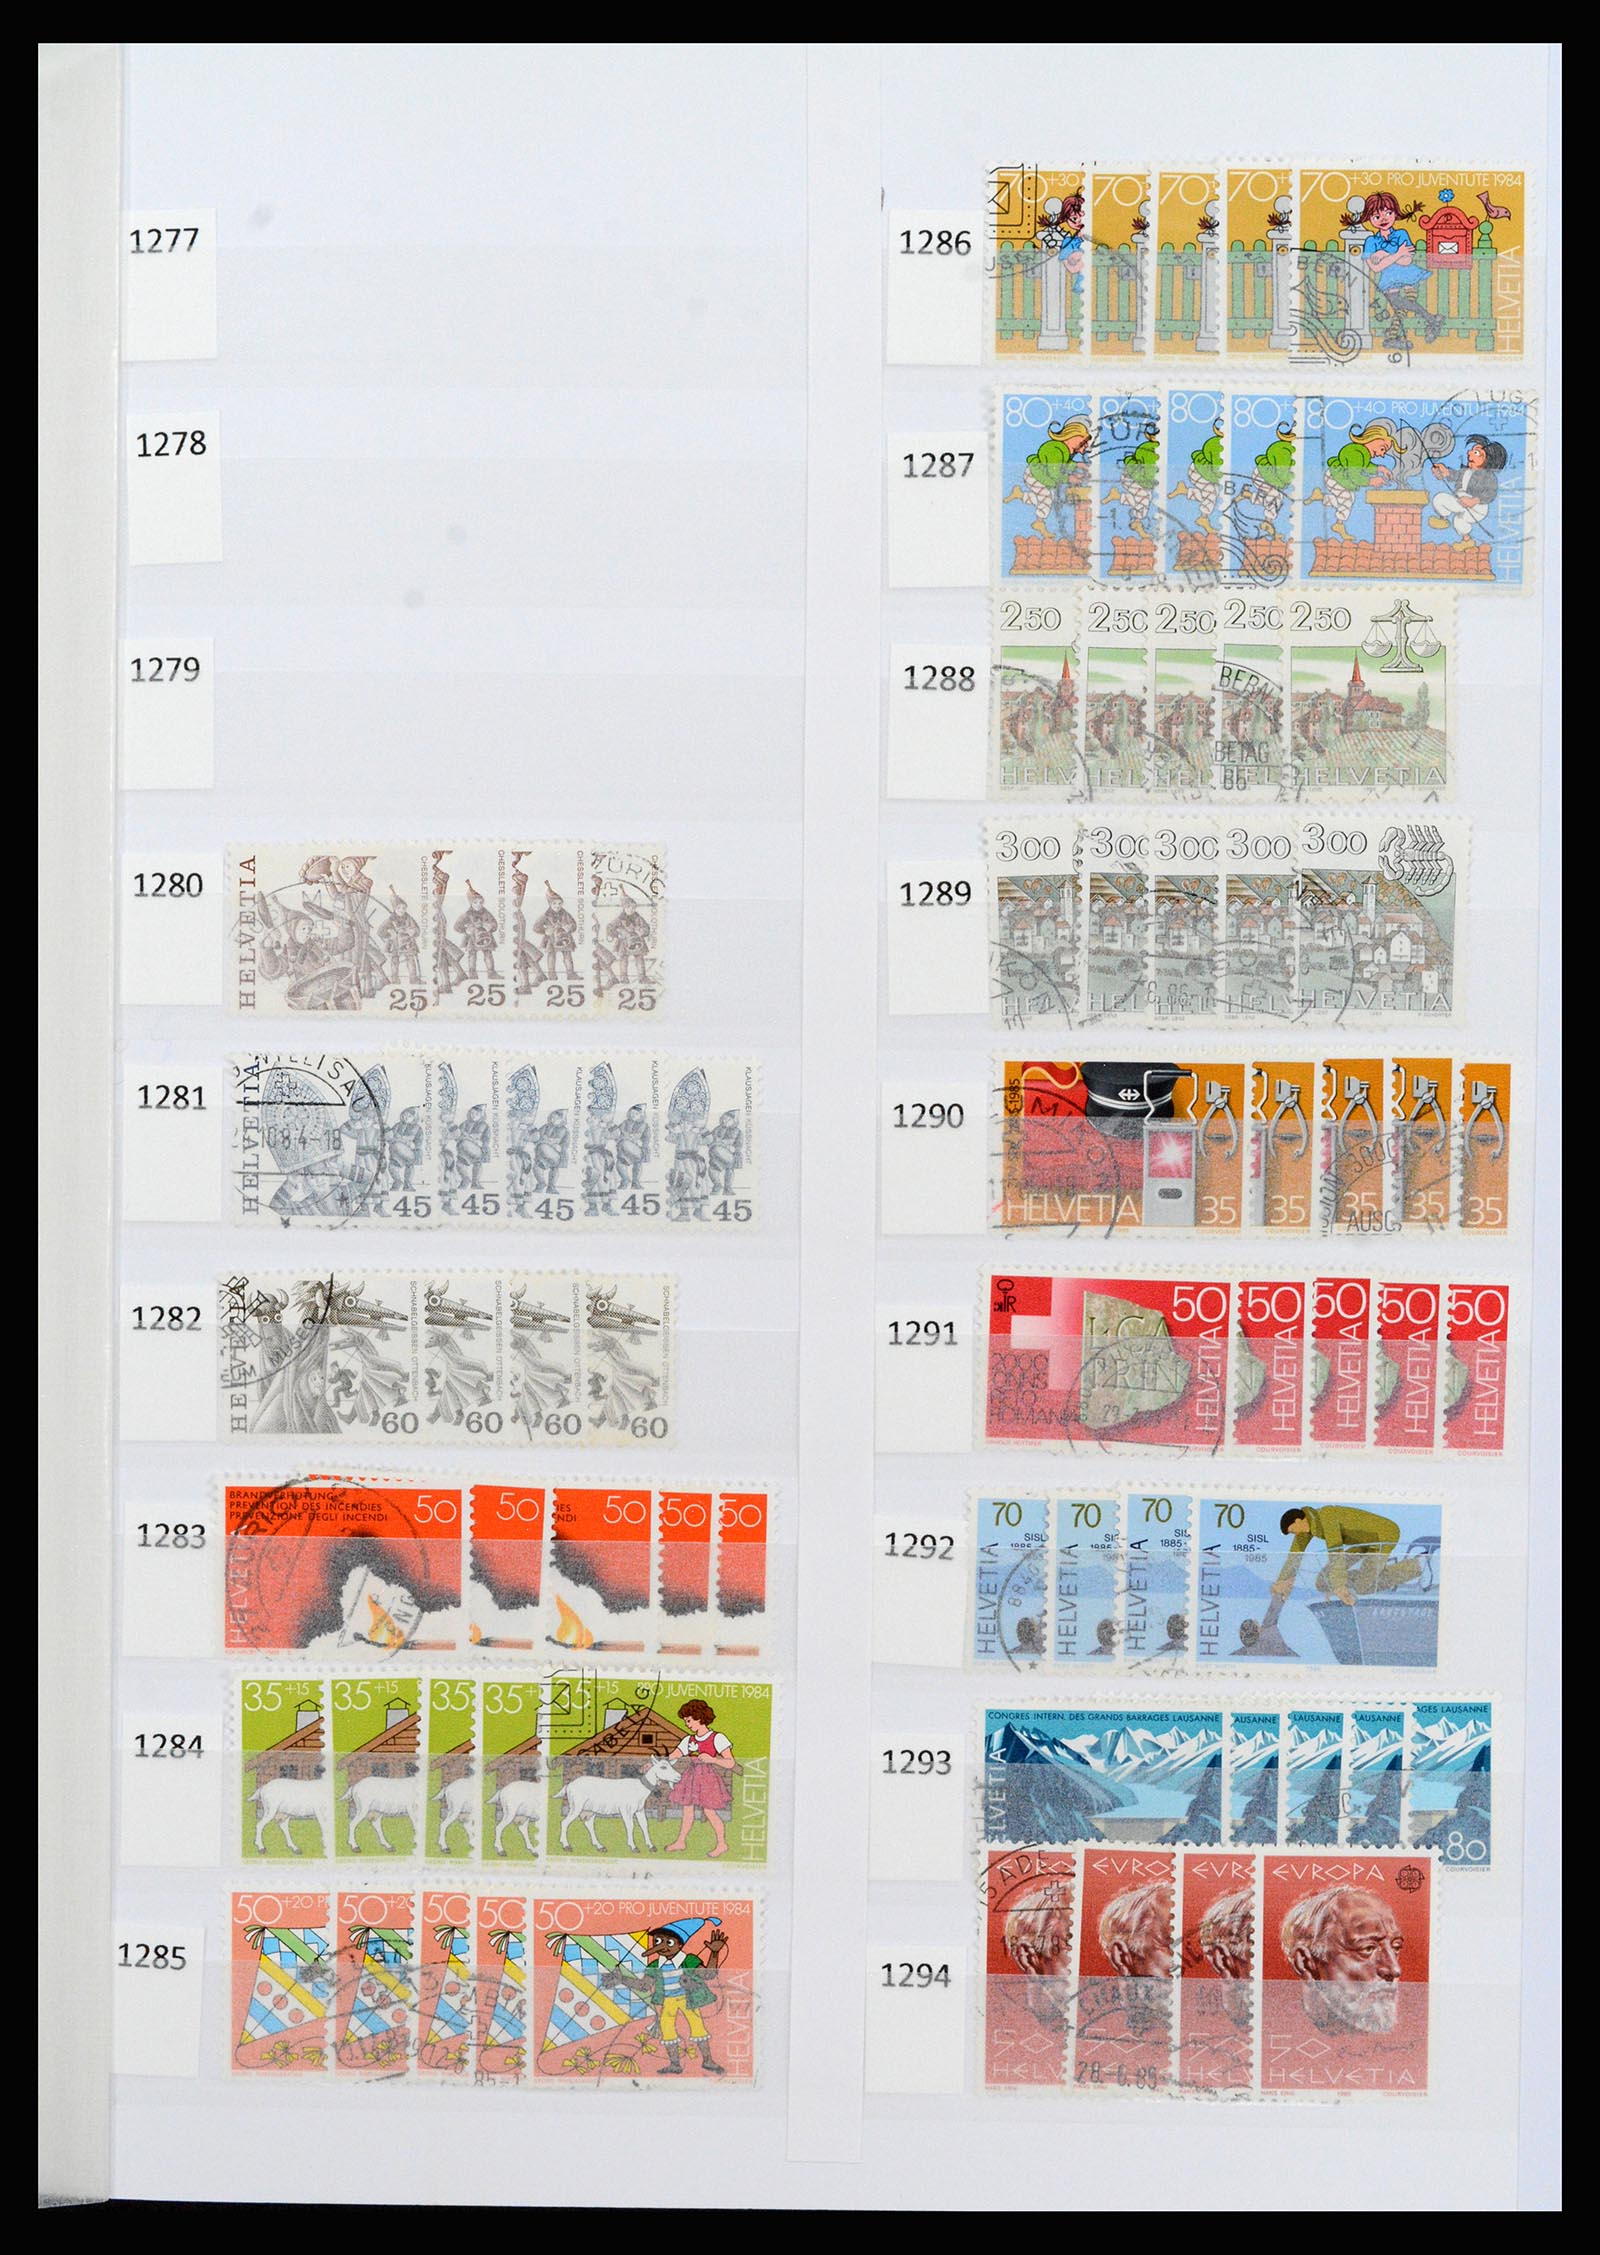 37252 072 - Stamp collection 37252 Switzerland 1900-2011.